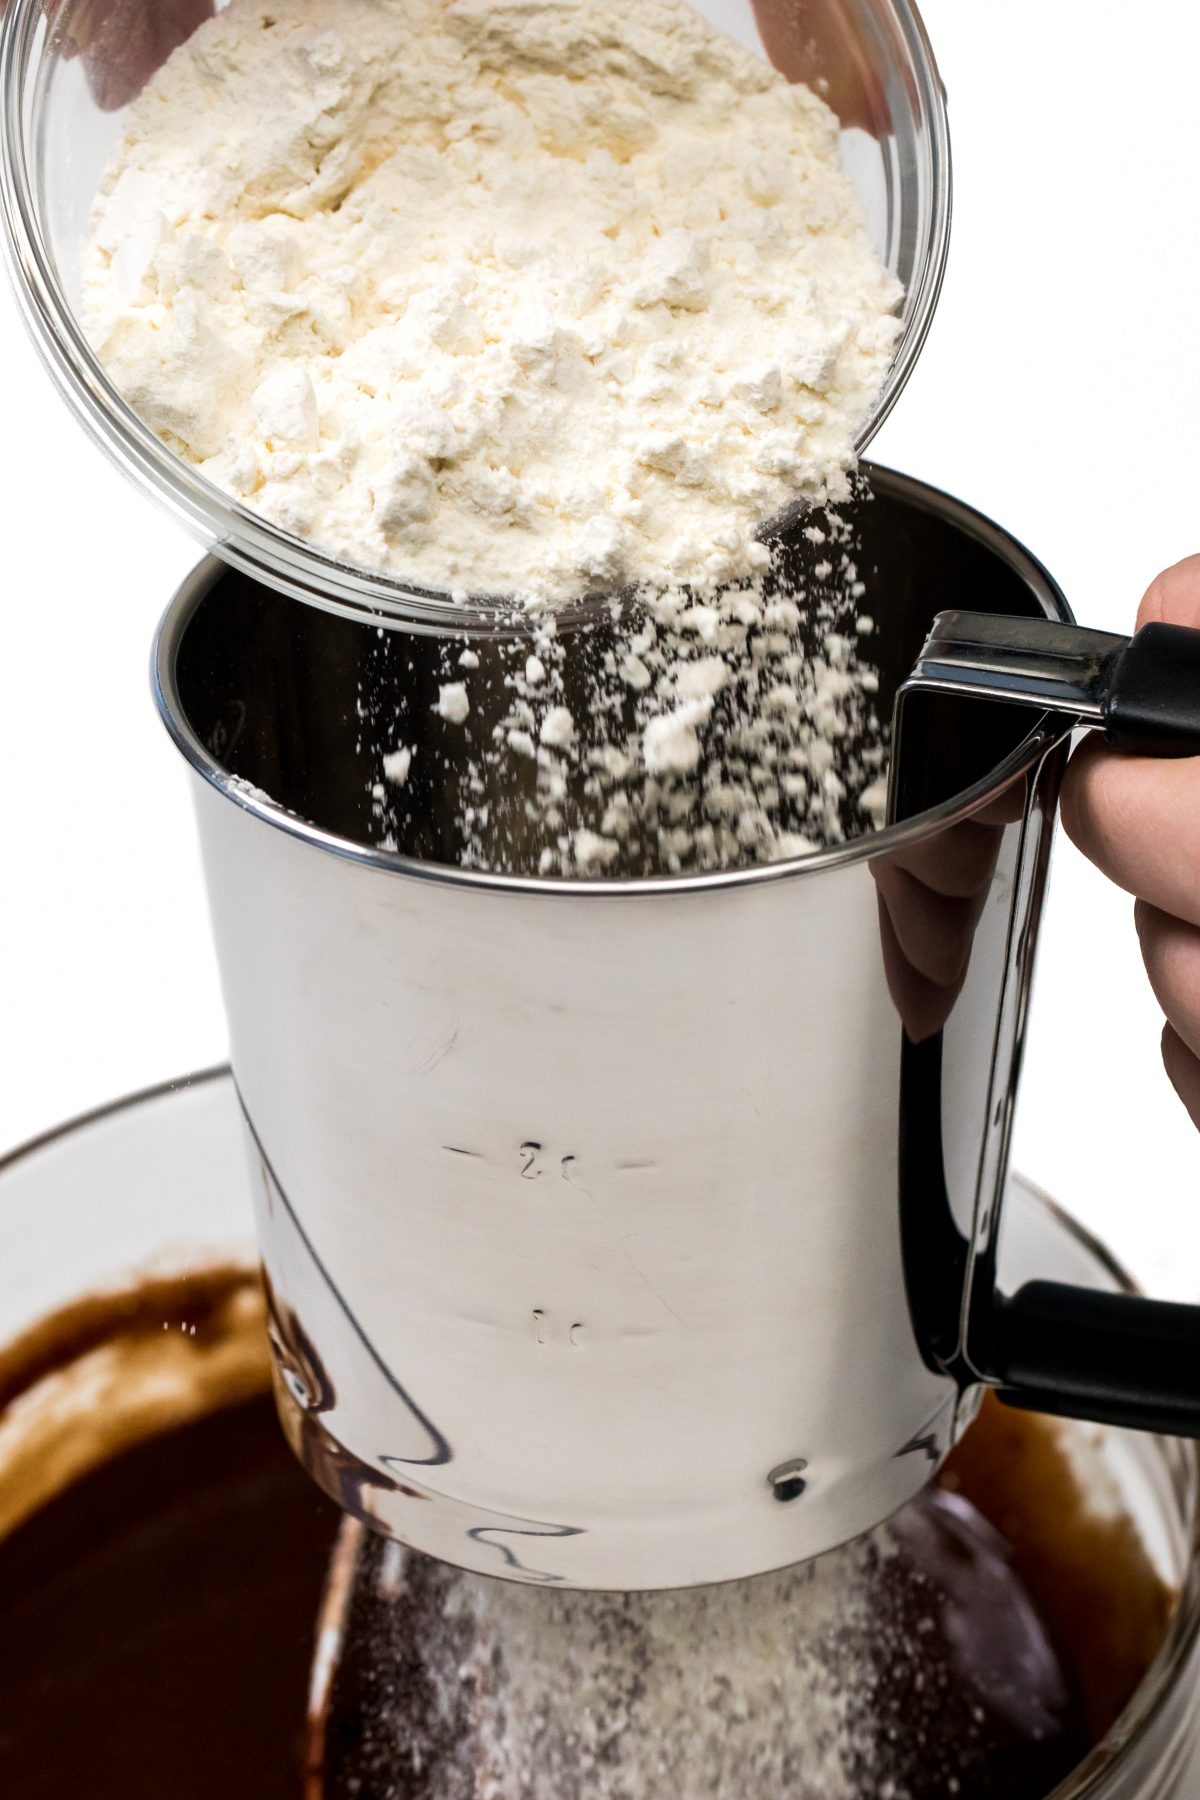 Sift flour into bowl